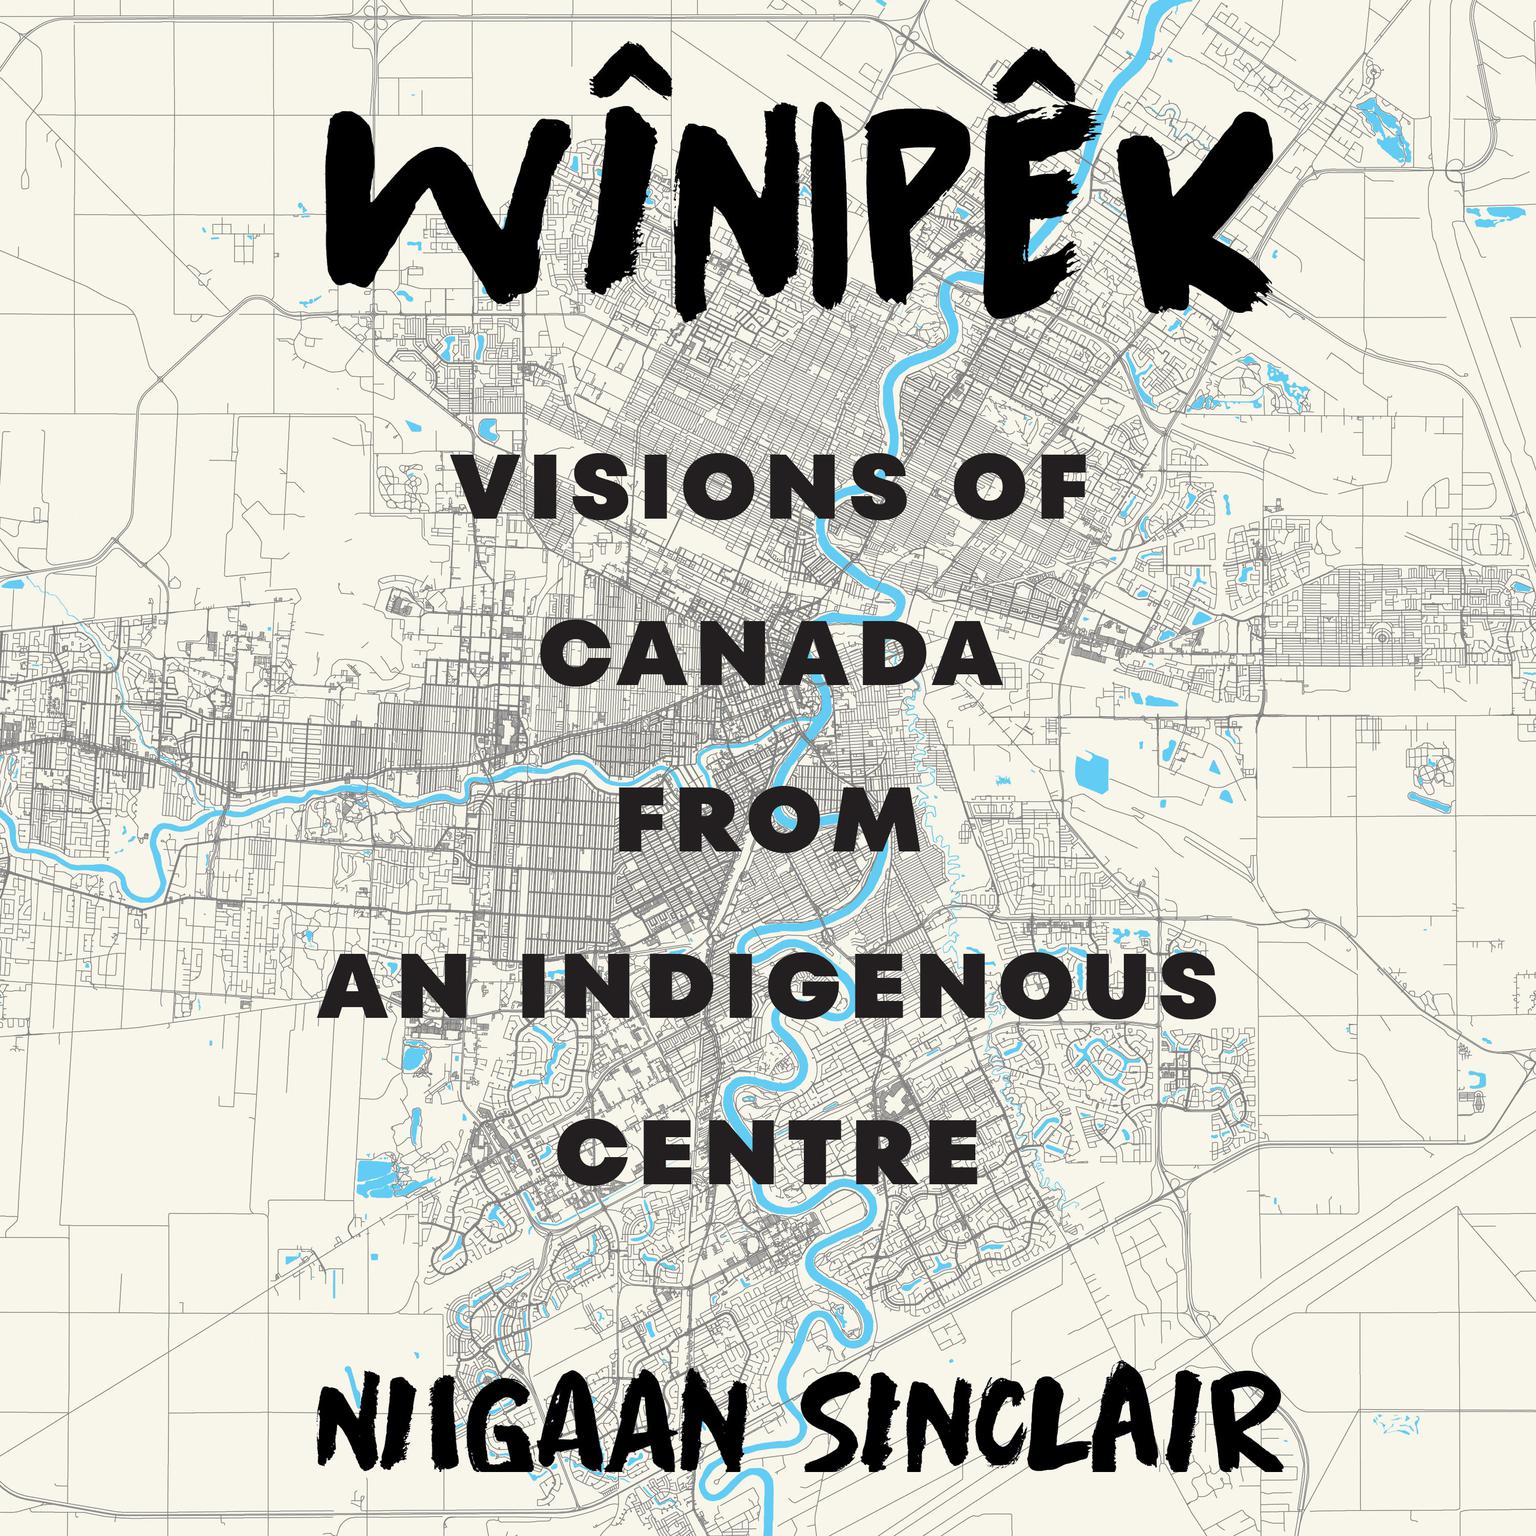 Wînipêk: Visions of Canada from an Indigenous Centre Audiobook, by Niigaan Sinclair